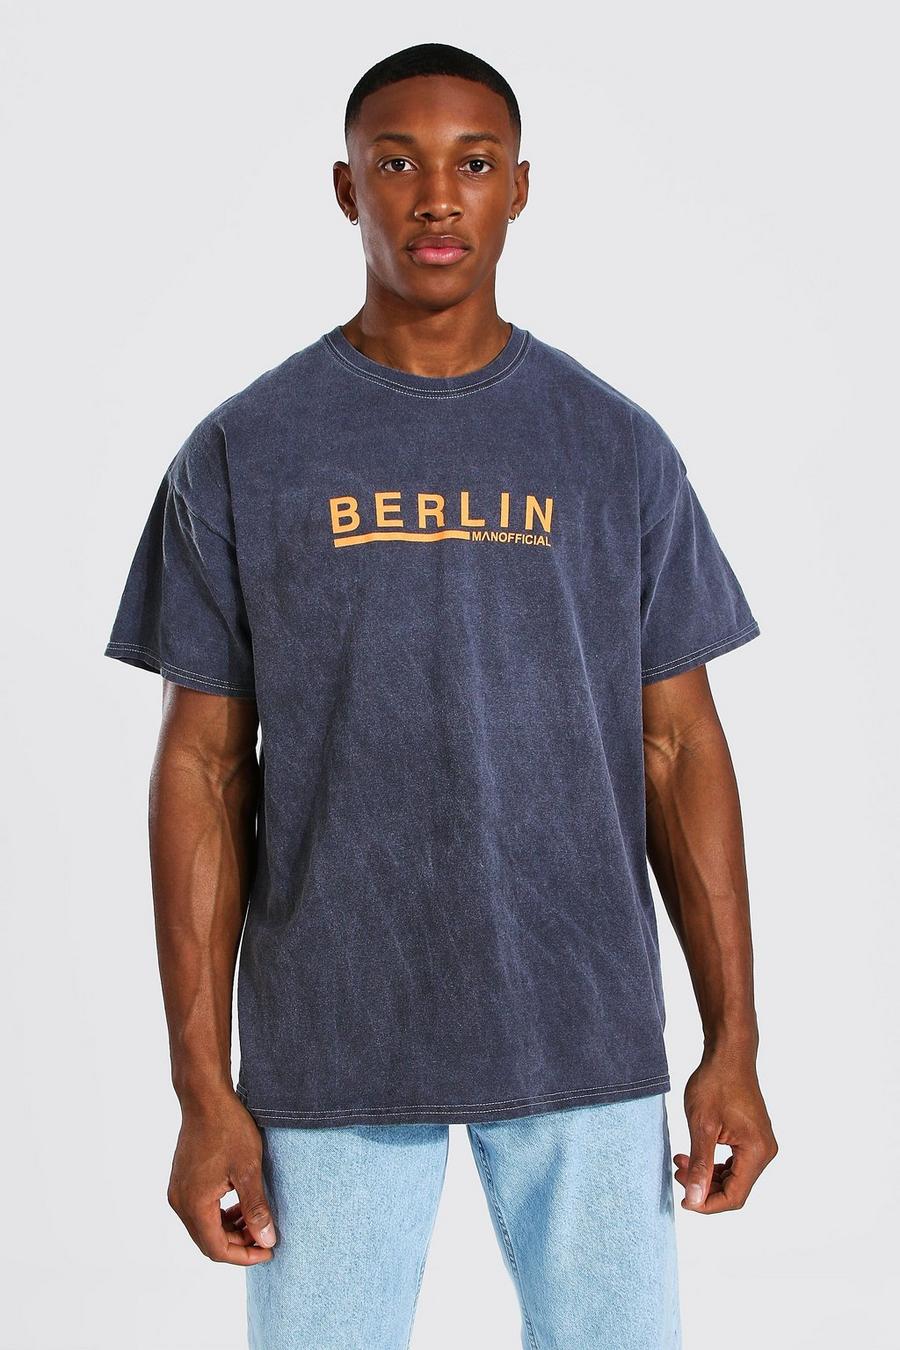 Houtskool Oversized Overdye Berlin T-Shirt image number 1